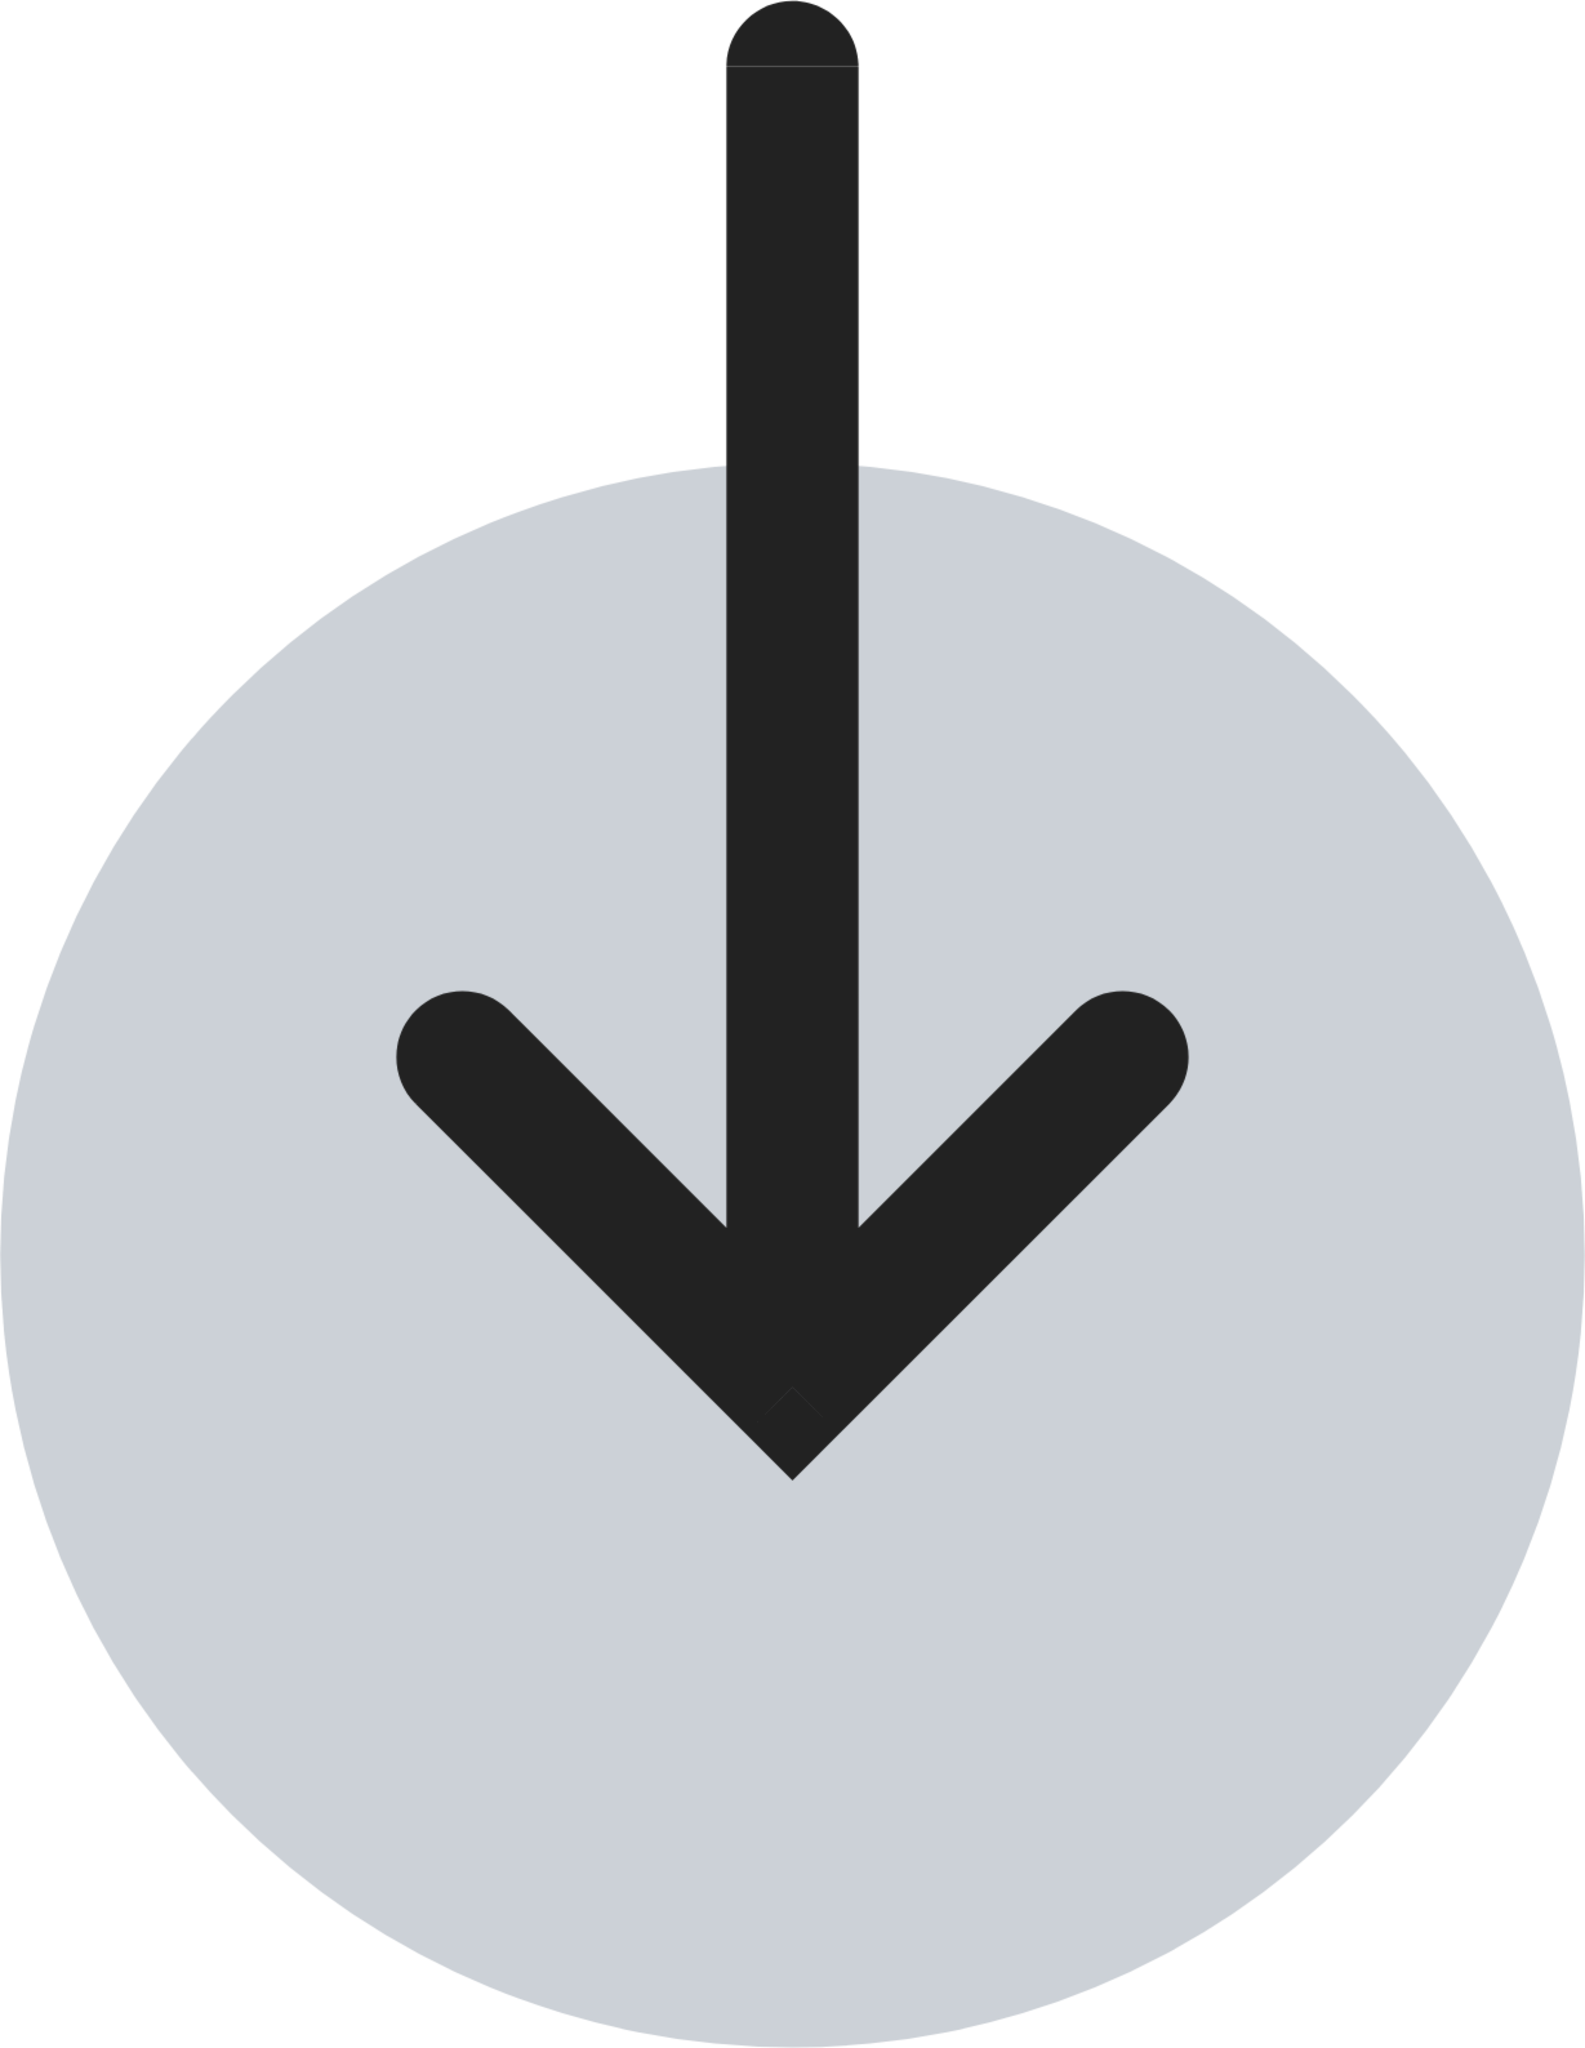 Load circle duotone icon